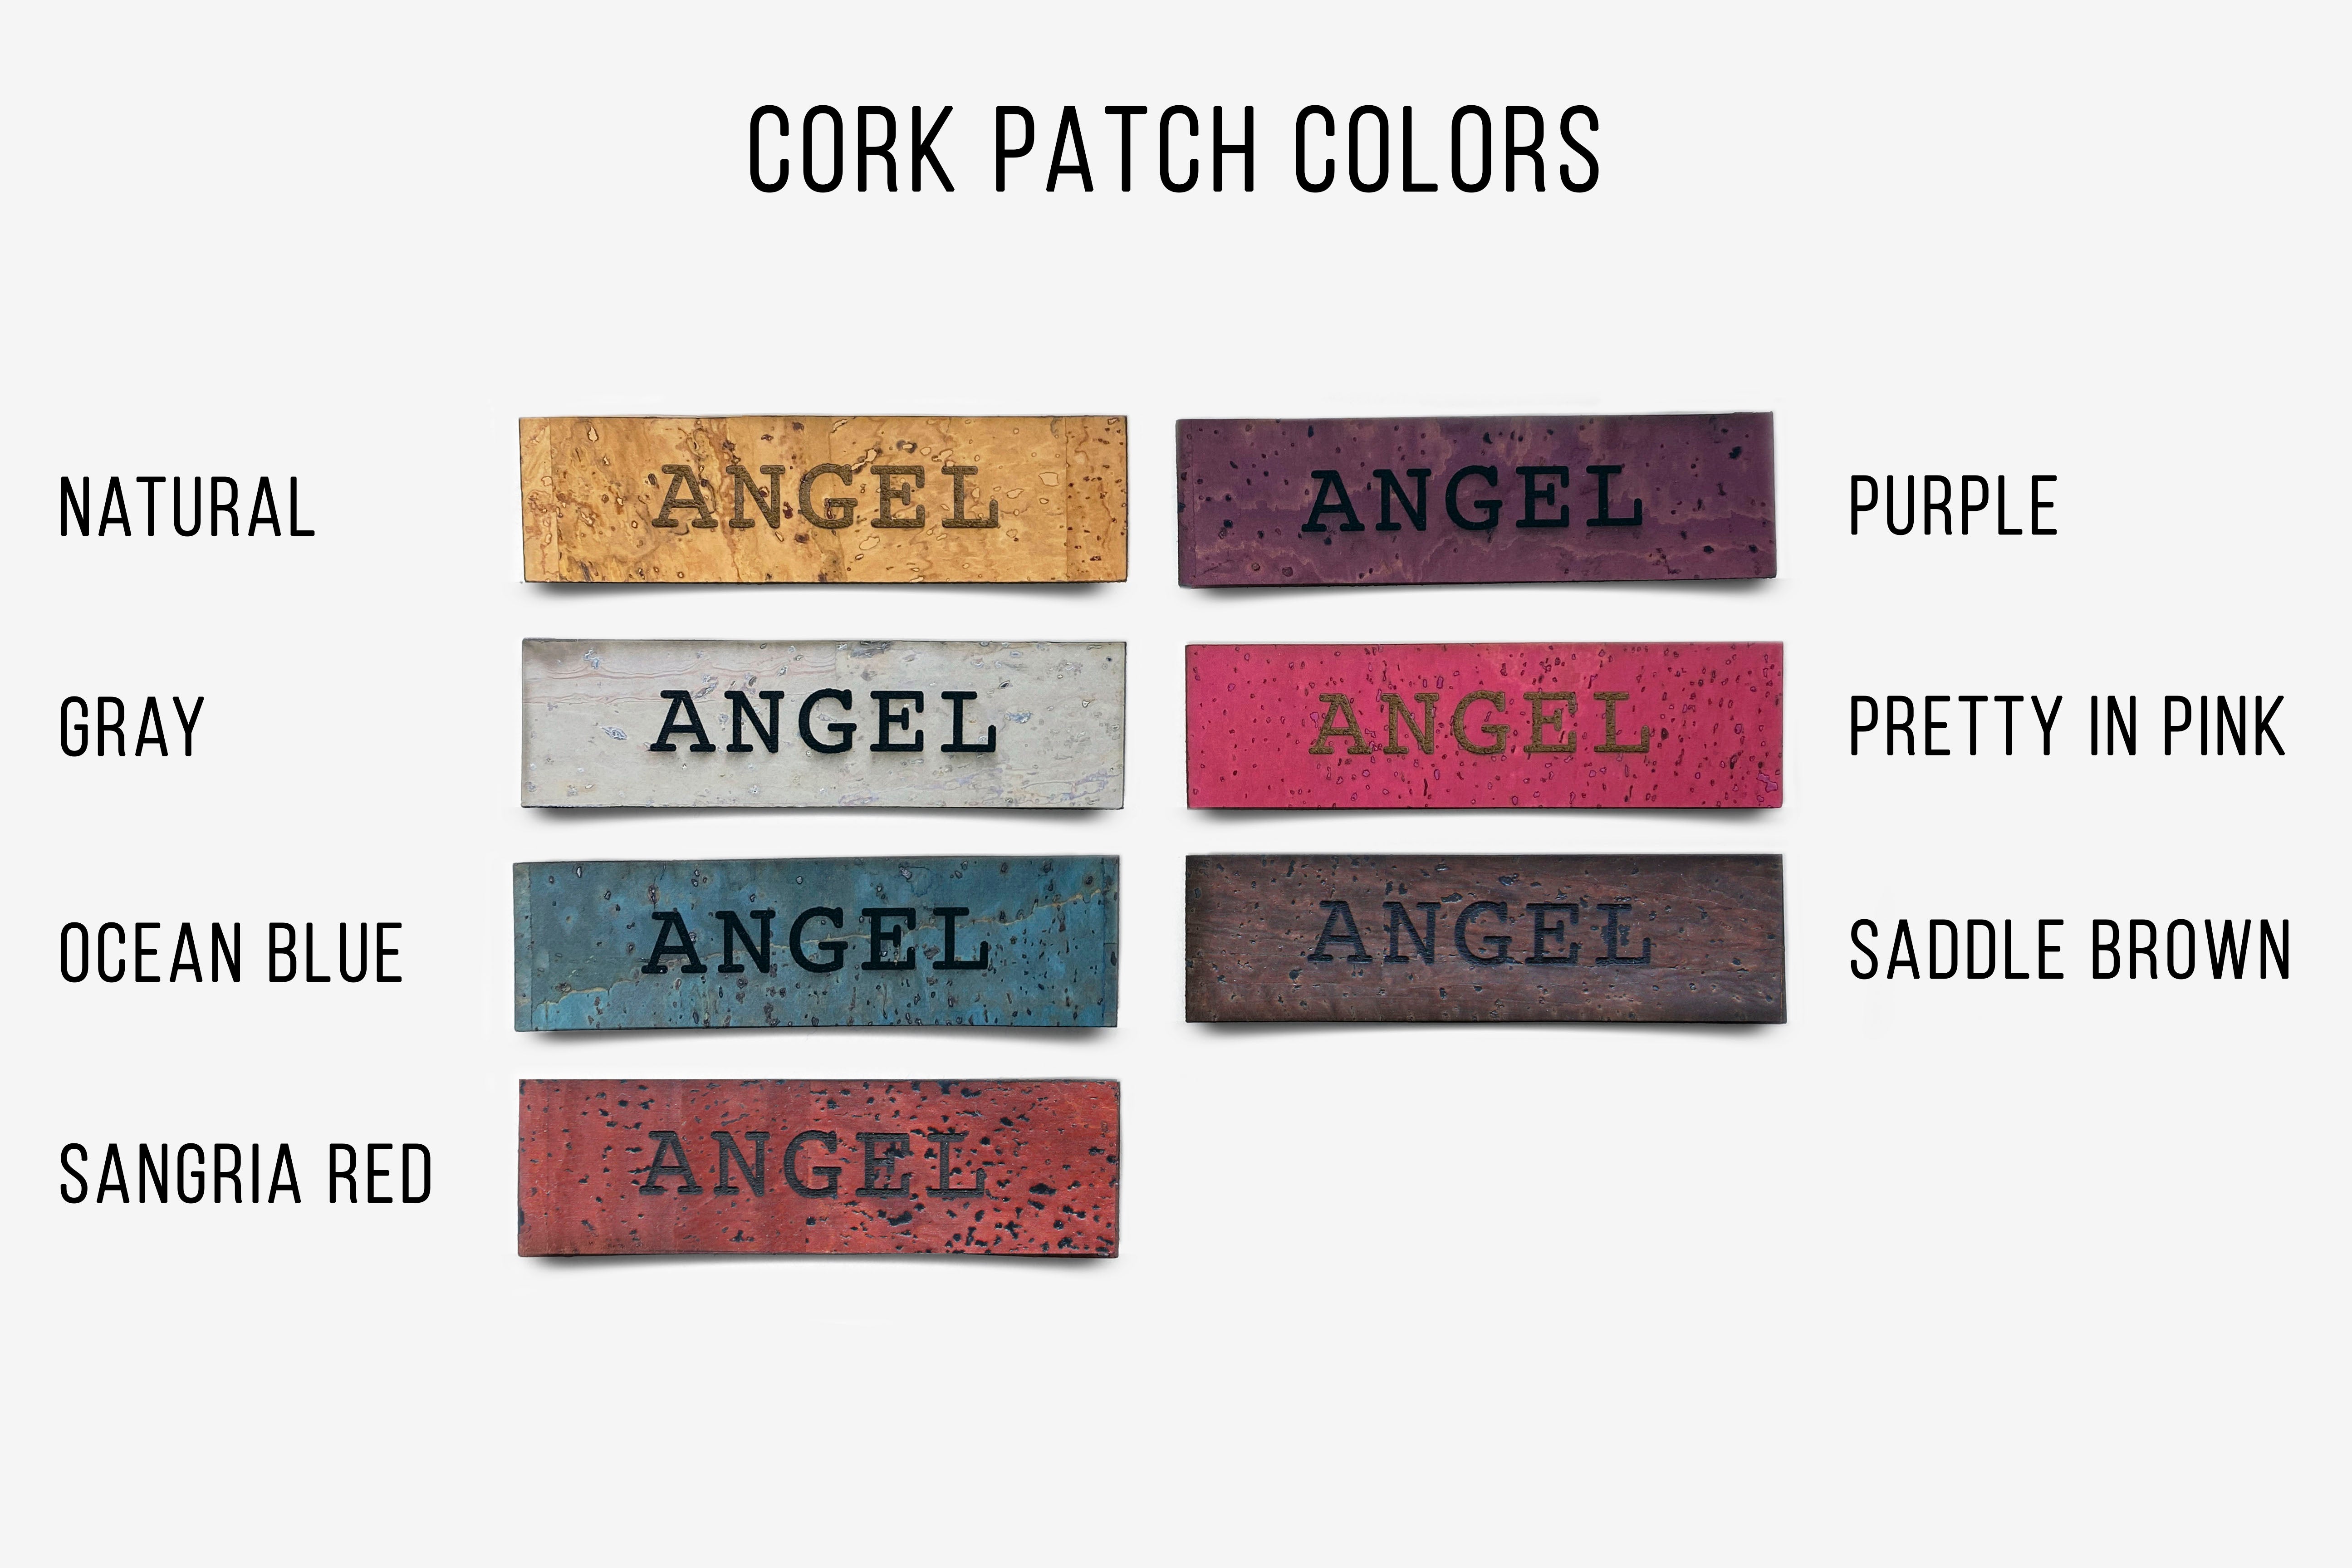 Personalized Cork Patch - Cork Colors